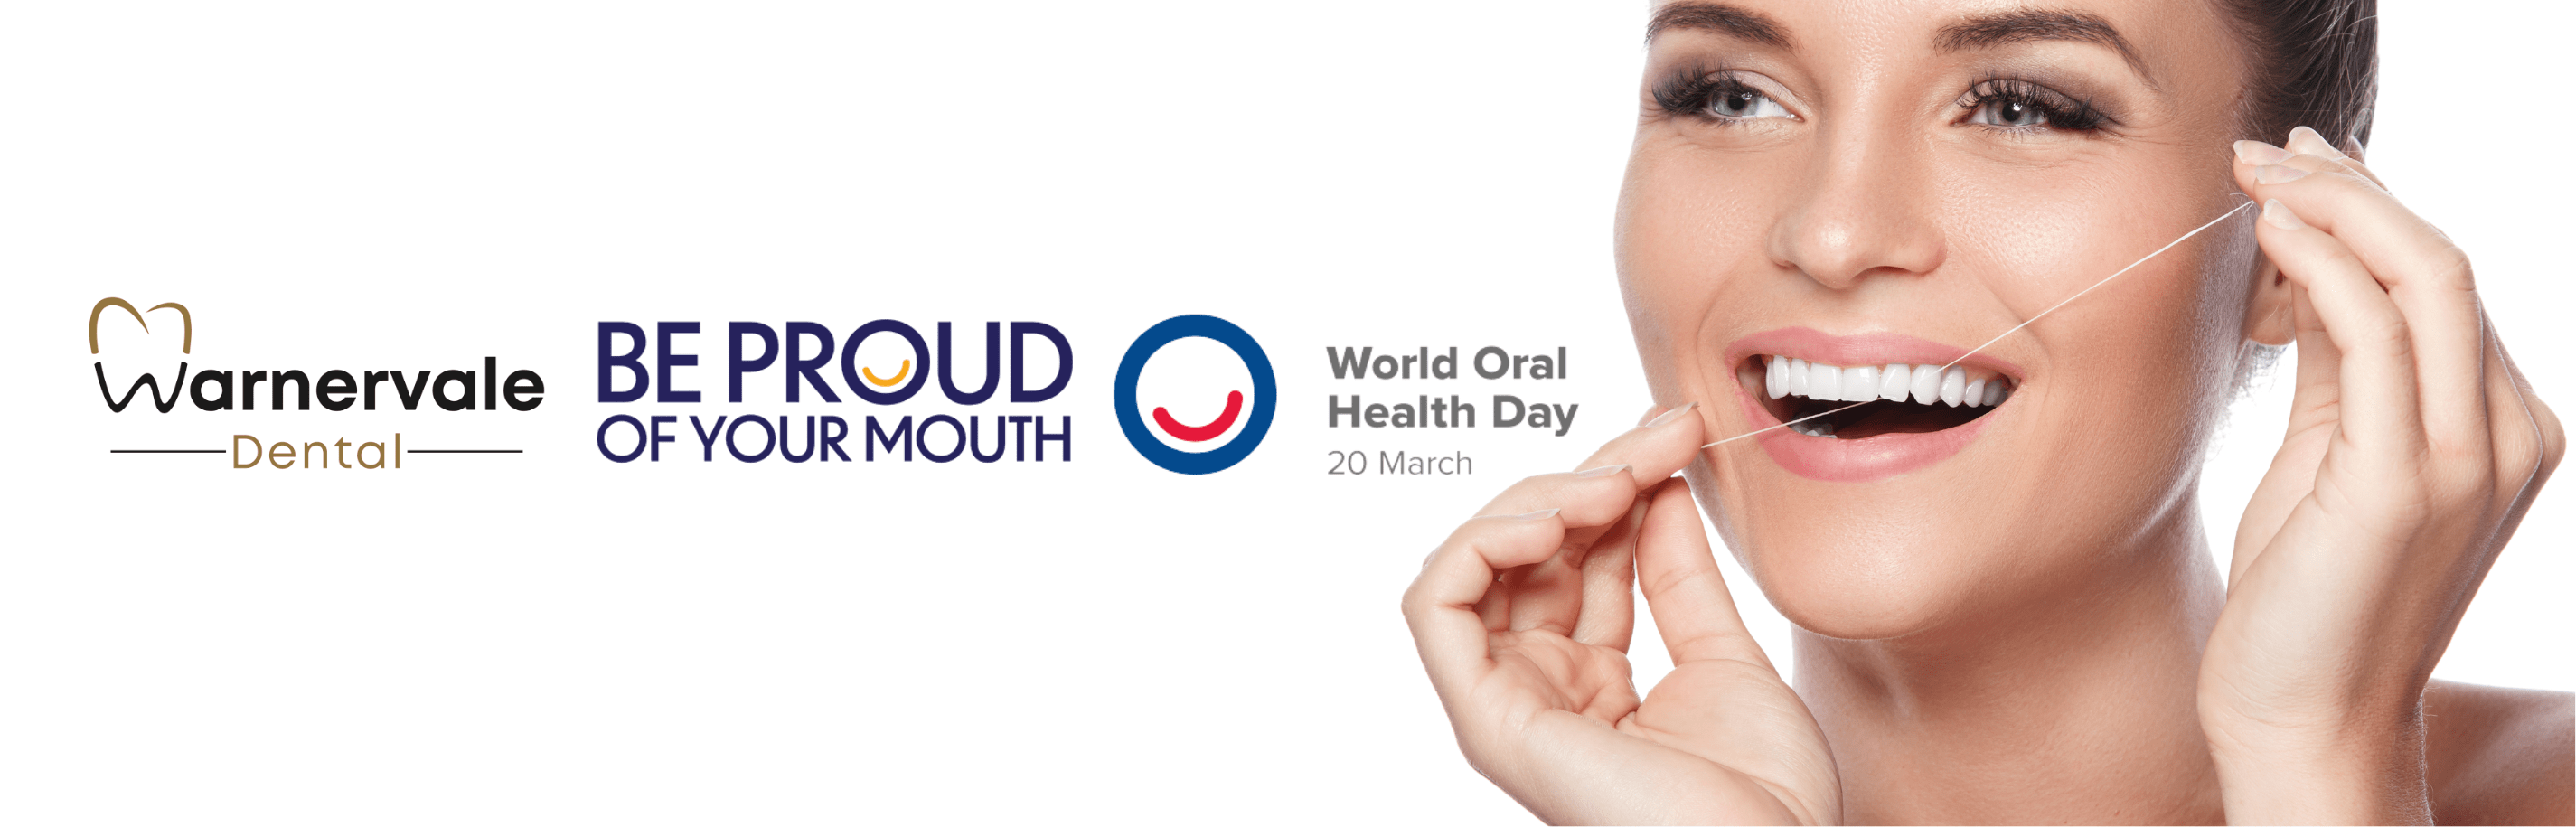 world oral health day warnervale dental